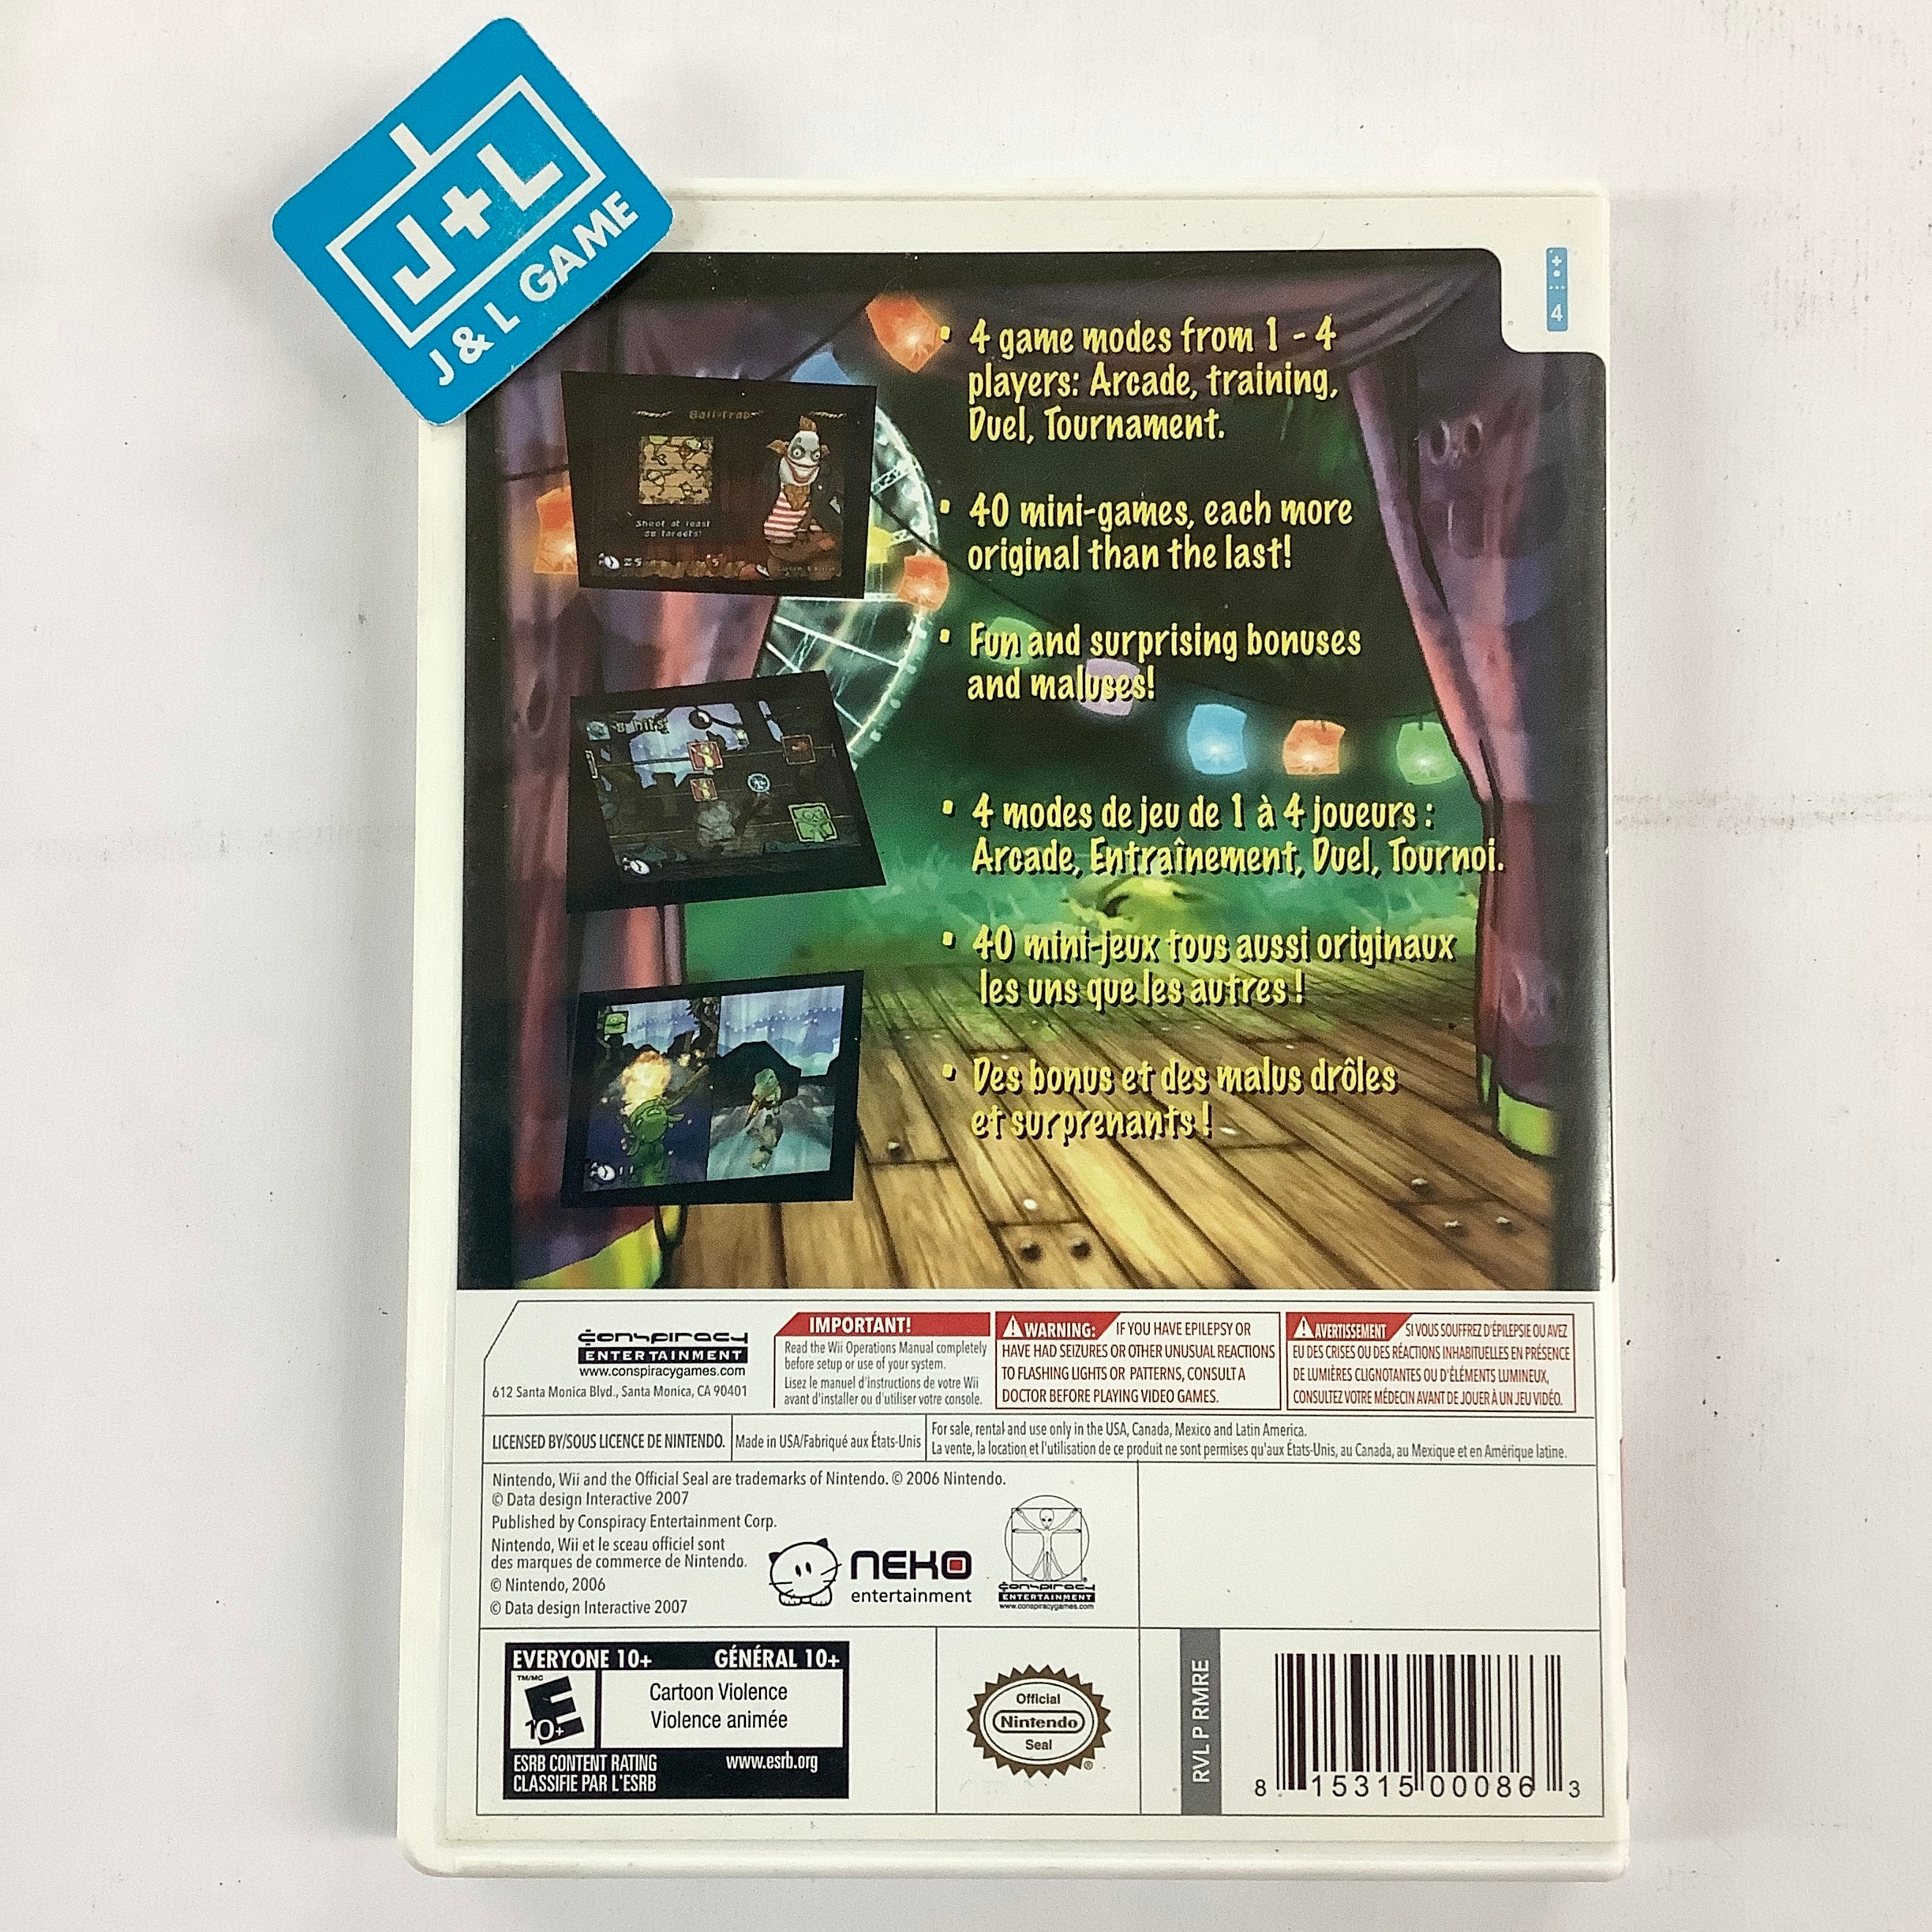 Cocoto Magic Circus - Nintendo Wii [Pre-Owned] Video Games Conspiracy Entertainment   